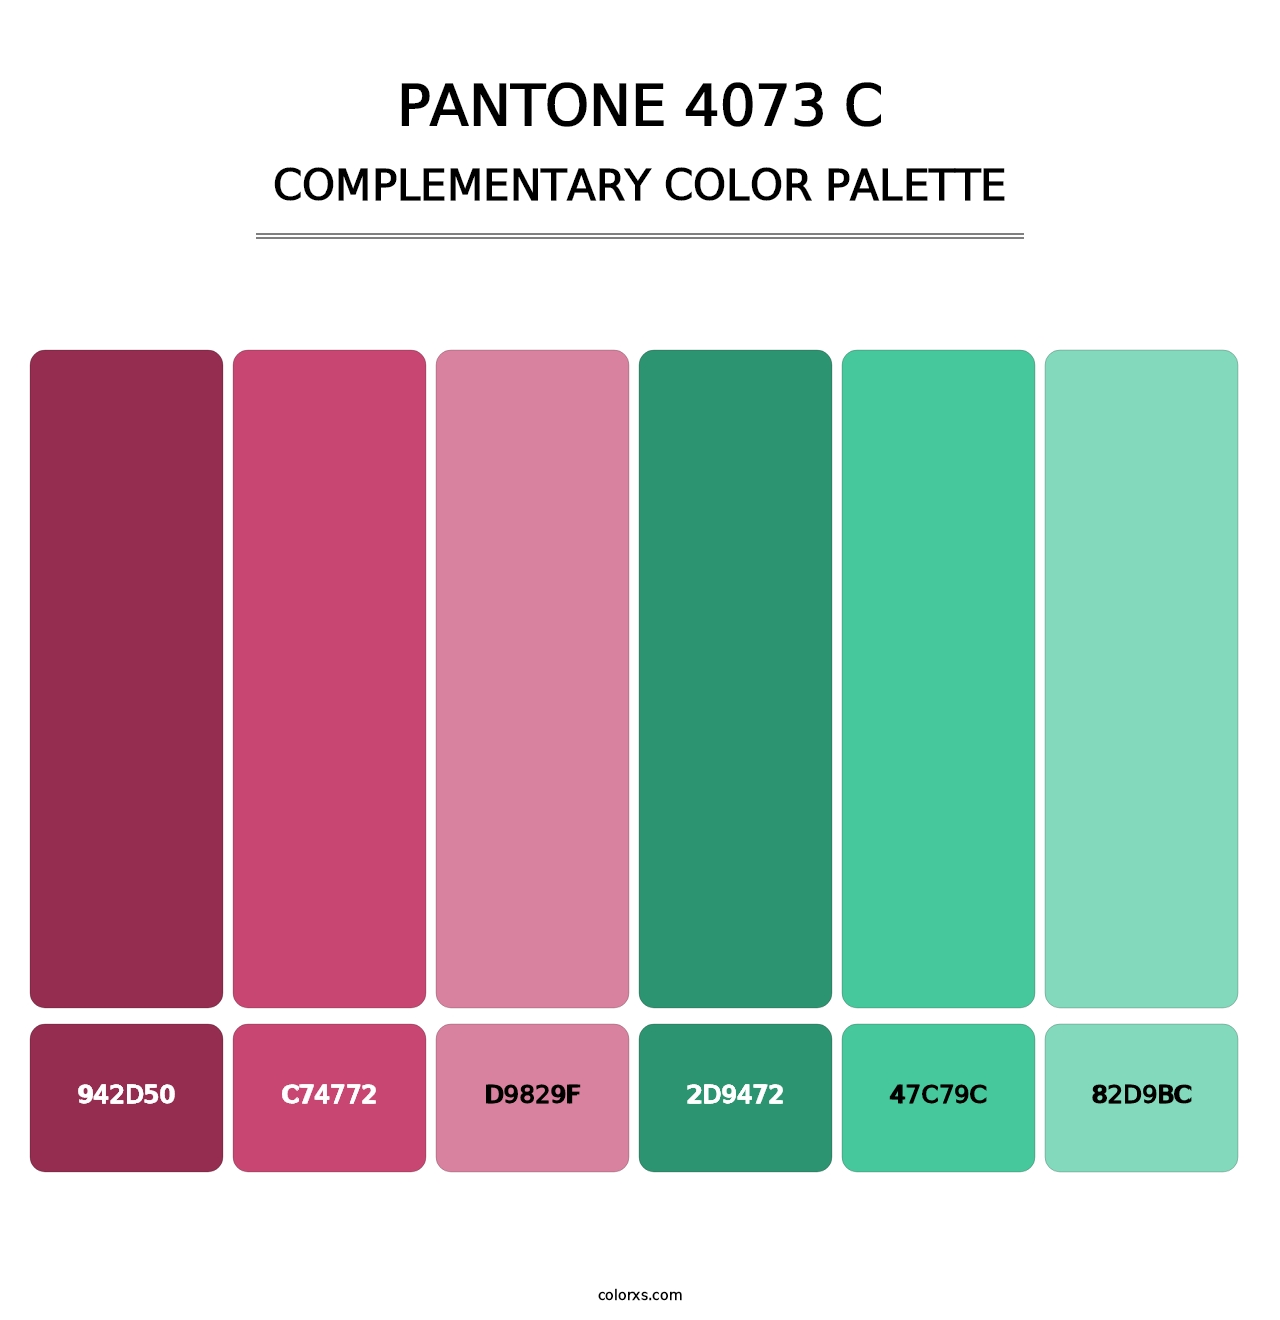 PANTONE 4073 C - Complementary Color Palette